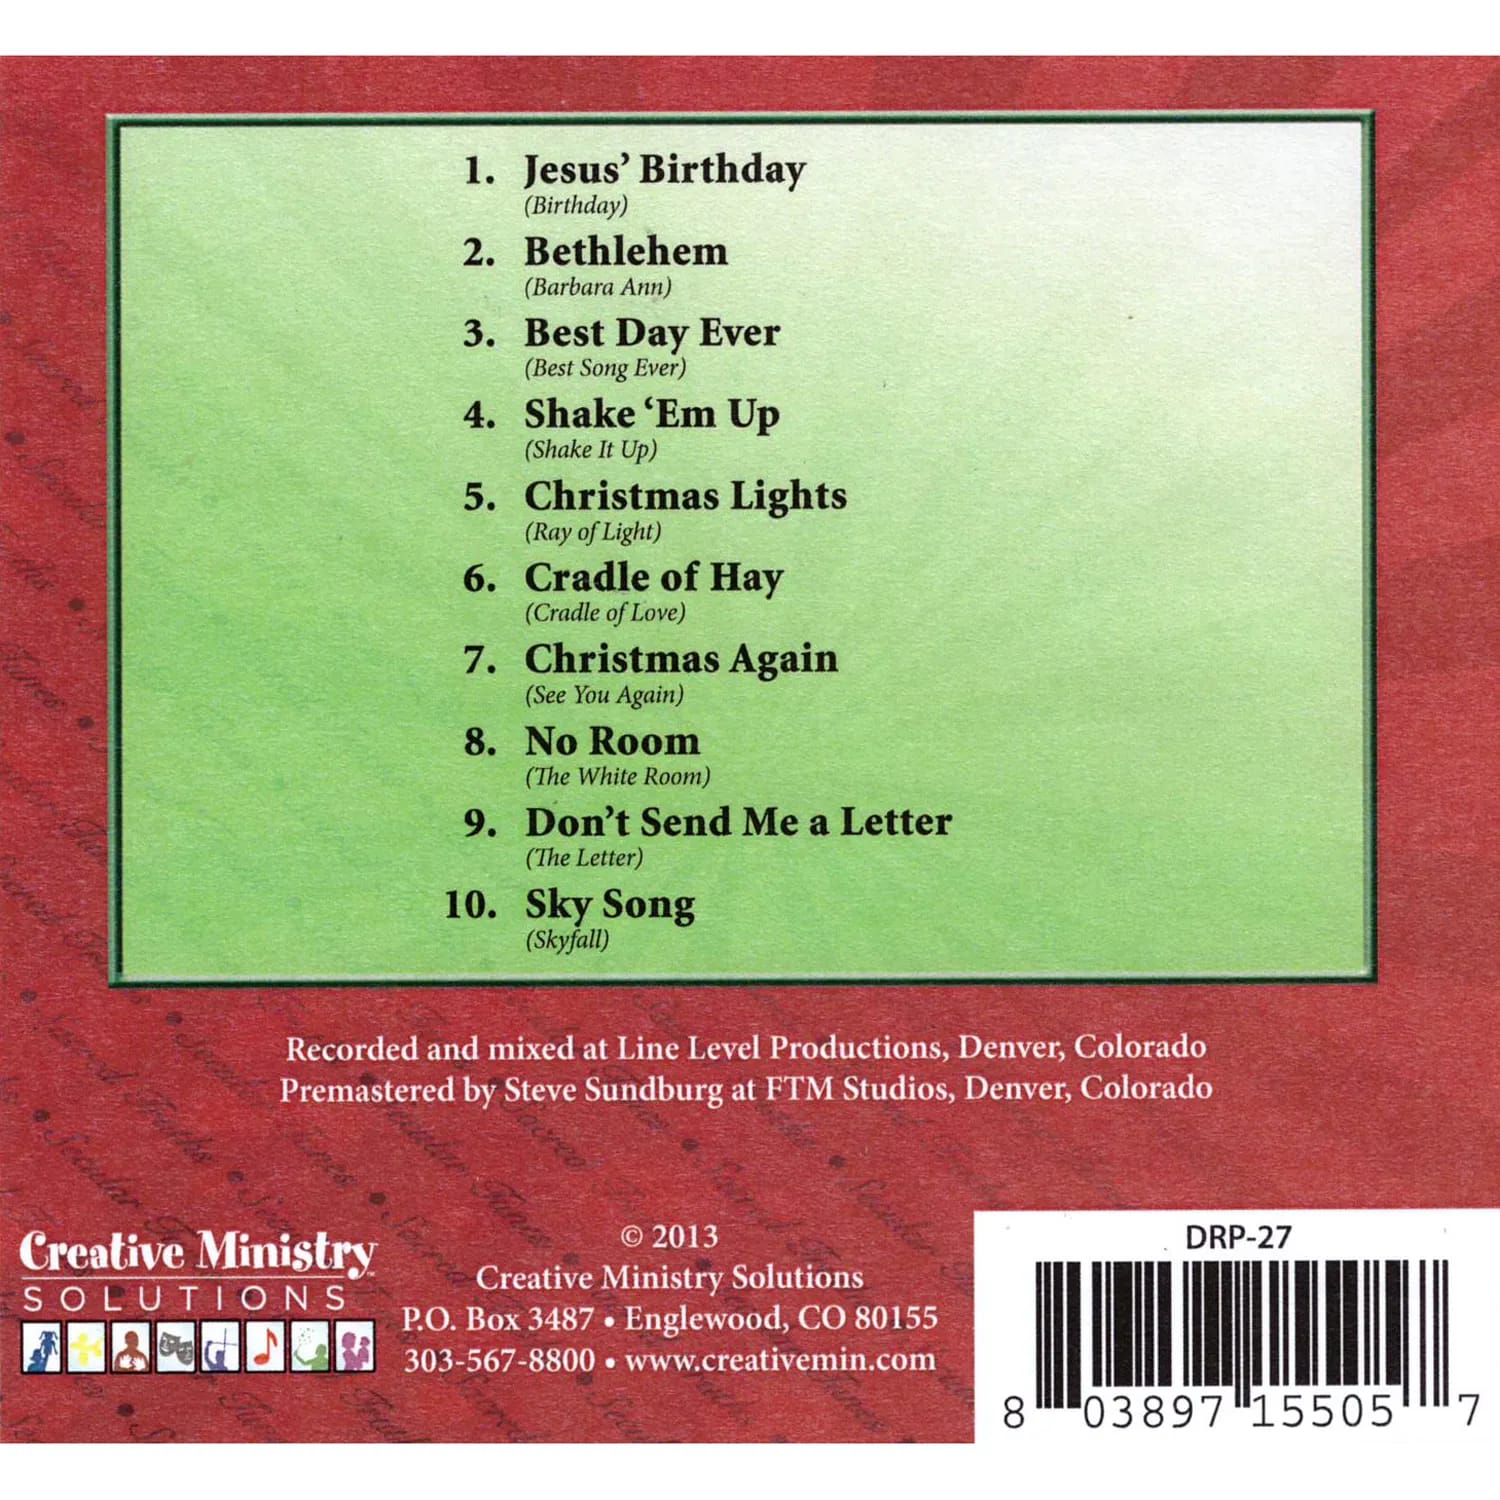 Righteous Pop Music Christmas Vol 3